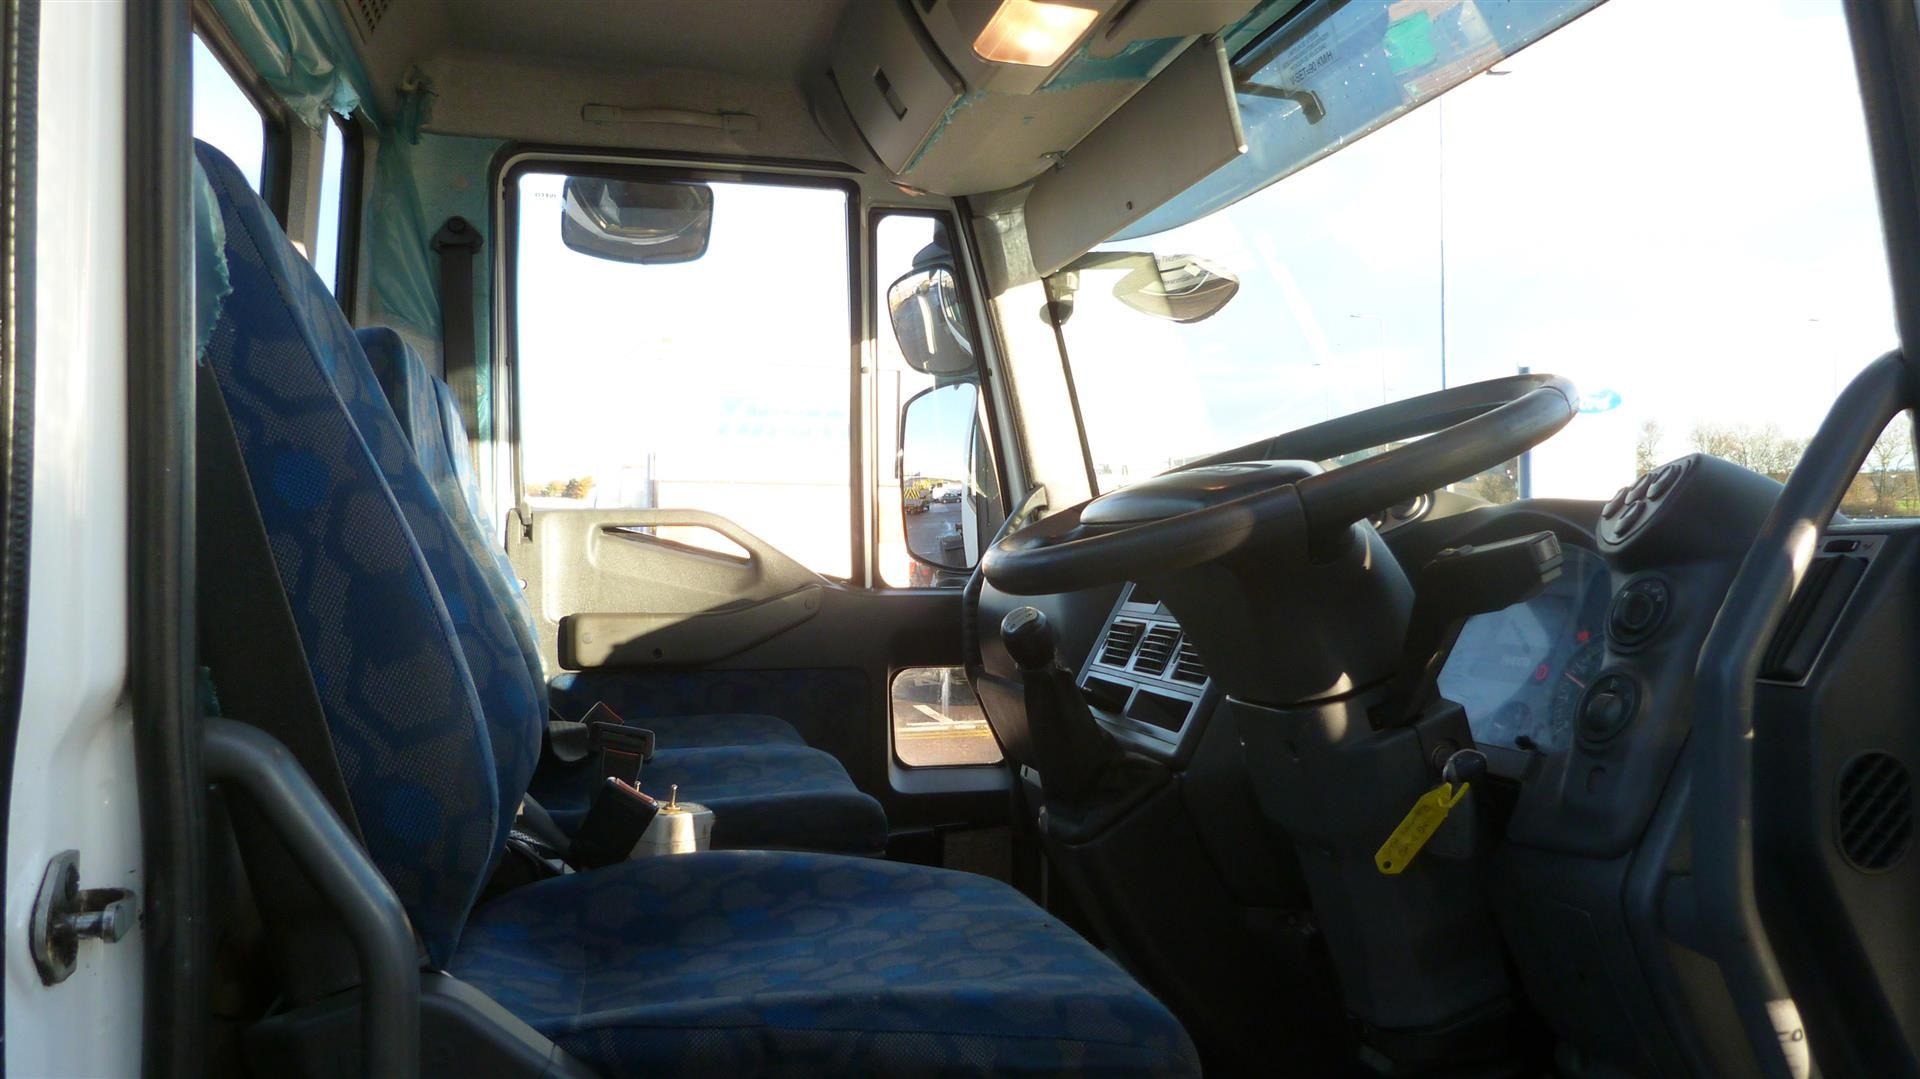 Iveco Eurocargo Ml75e16s Day - 3920cc 2 Door Truck - Image 4 of 4